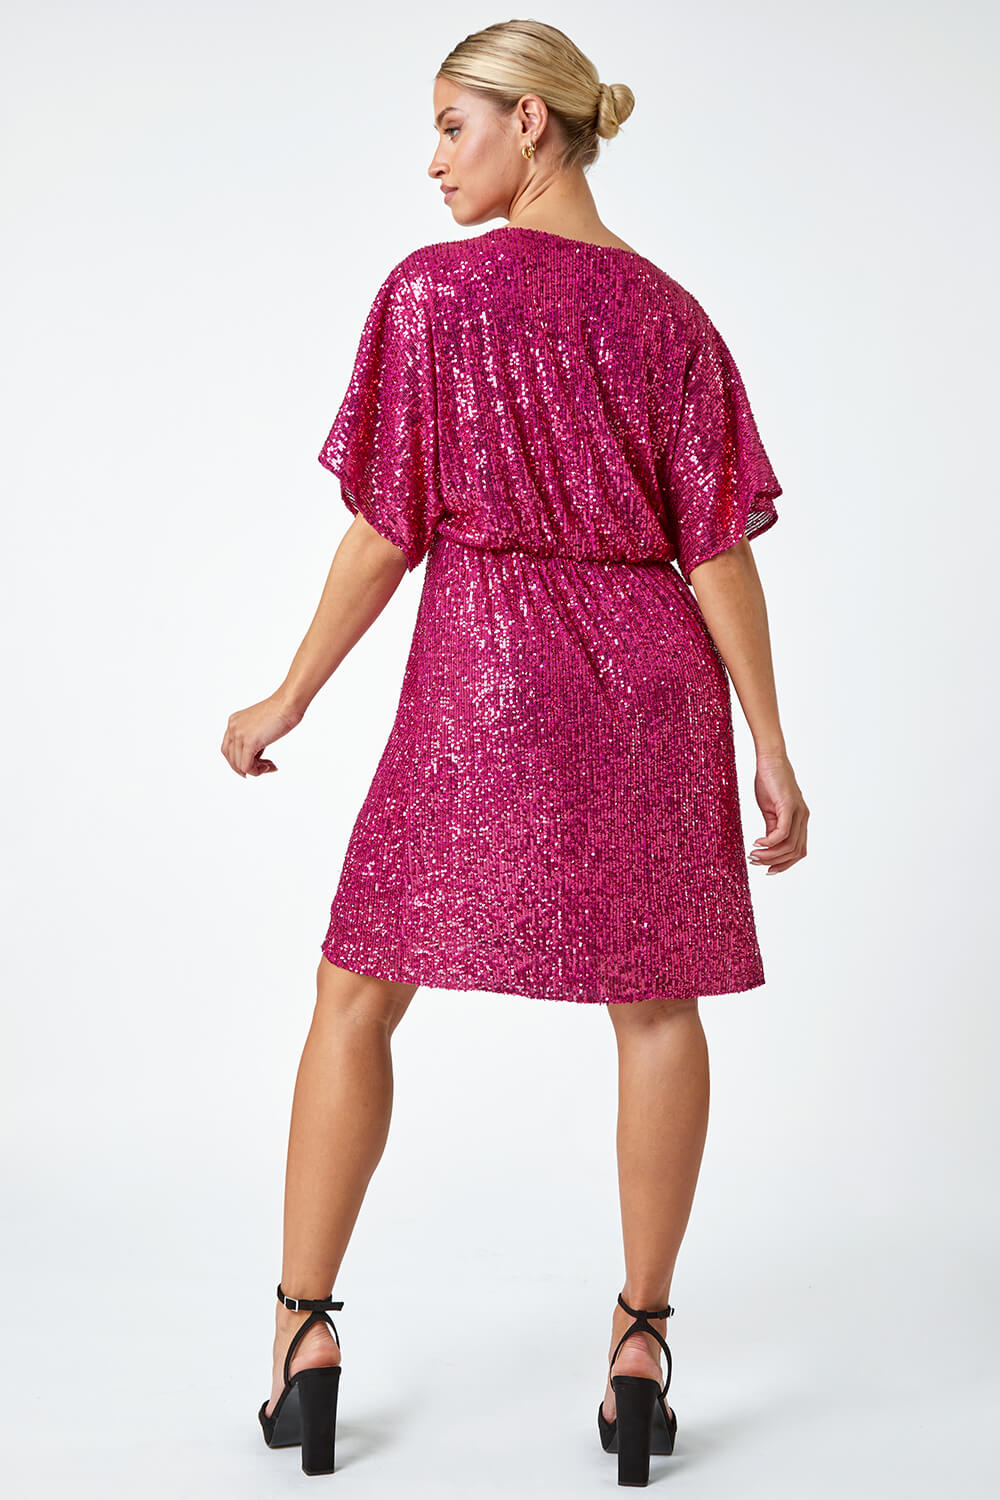 PINK Sequin Embellished Wrap Stretch Dress, Image 3 of 6